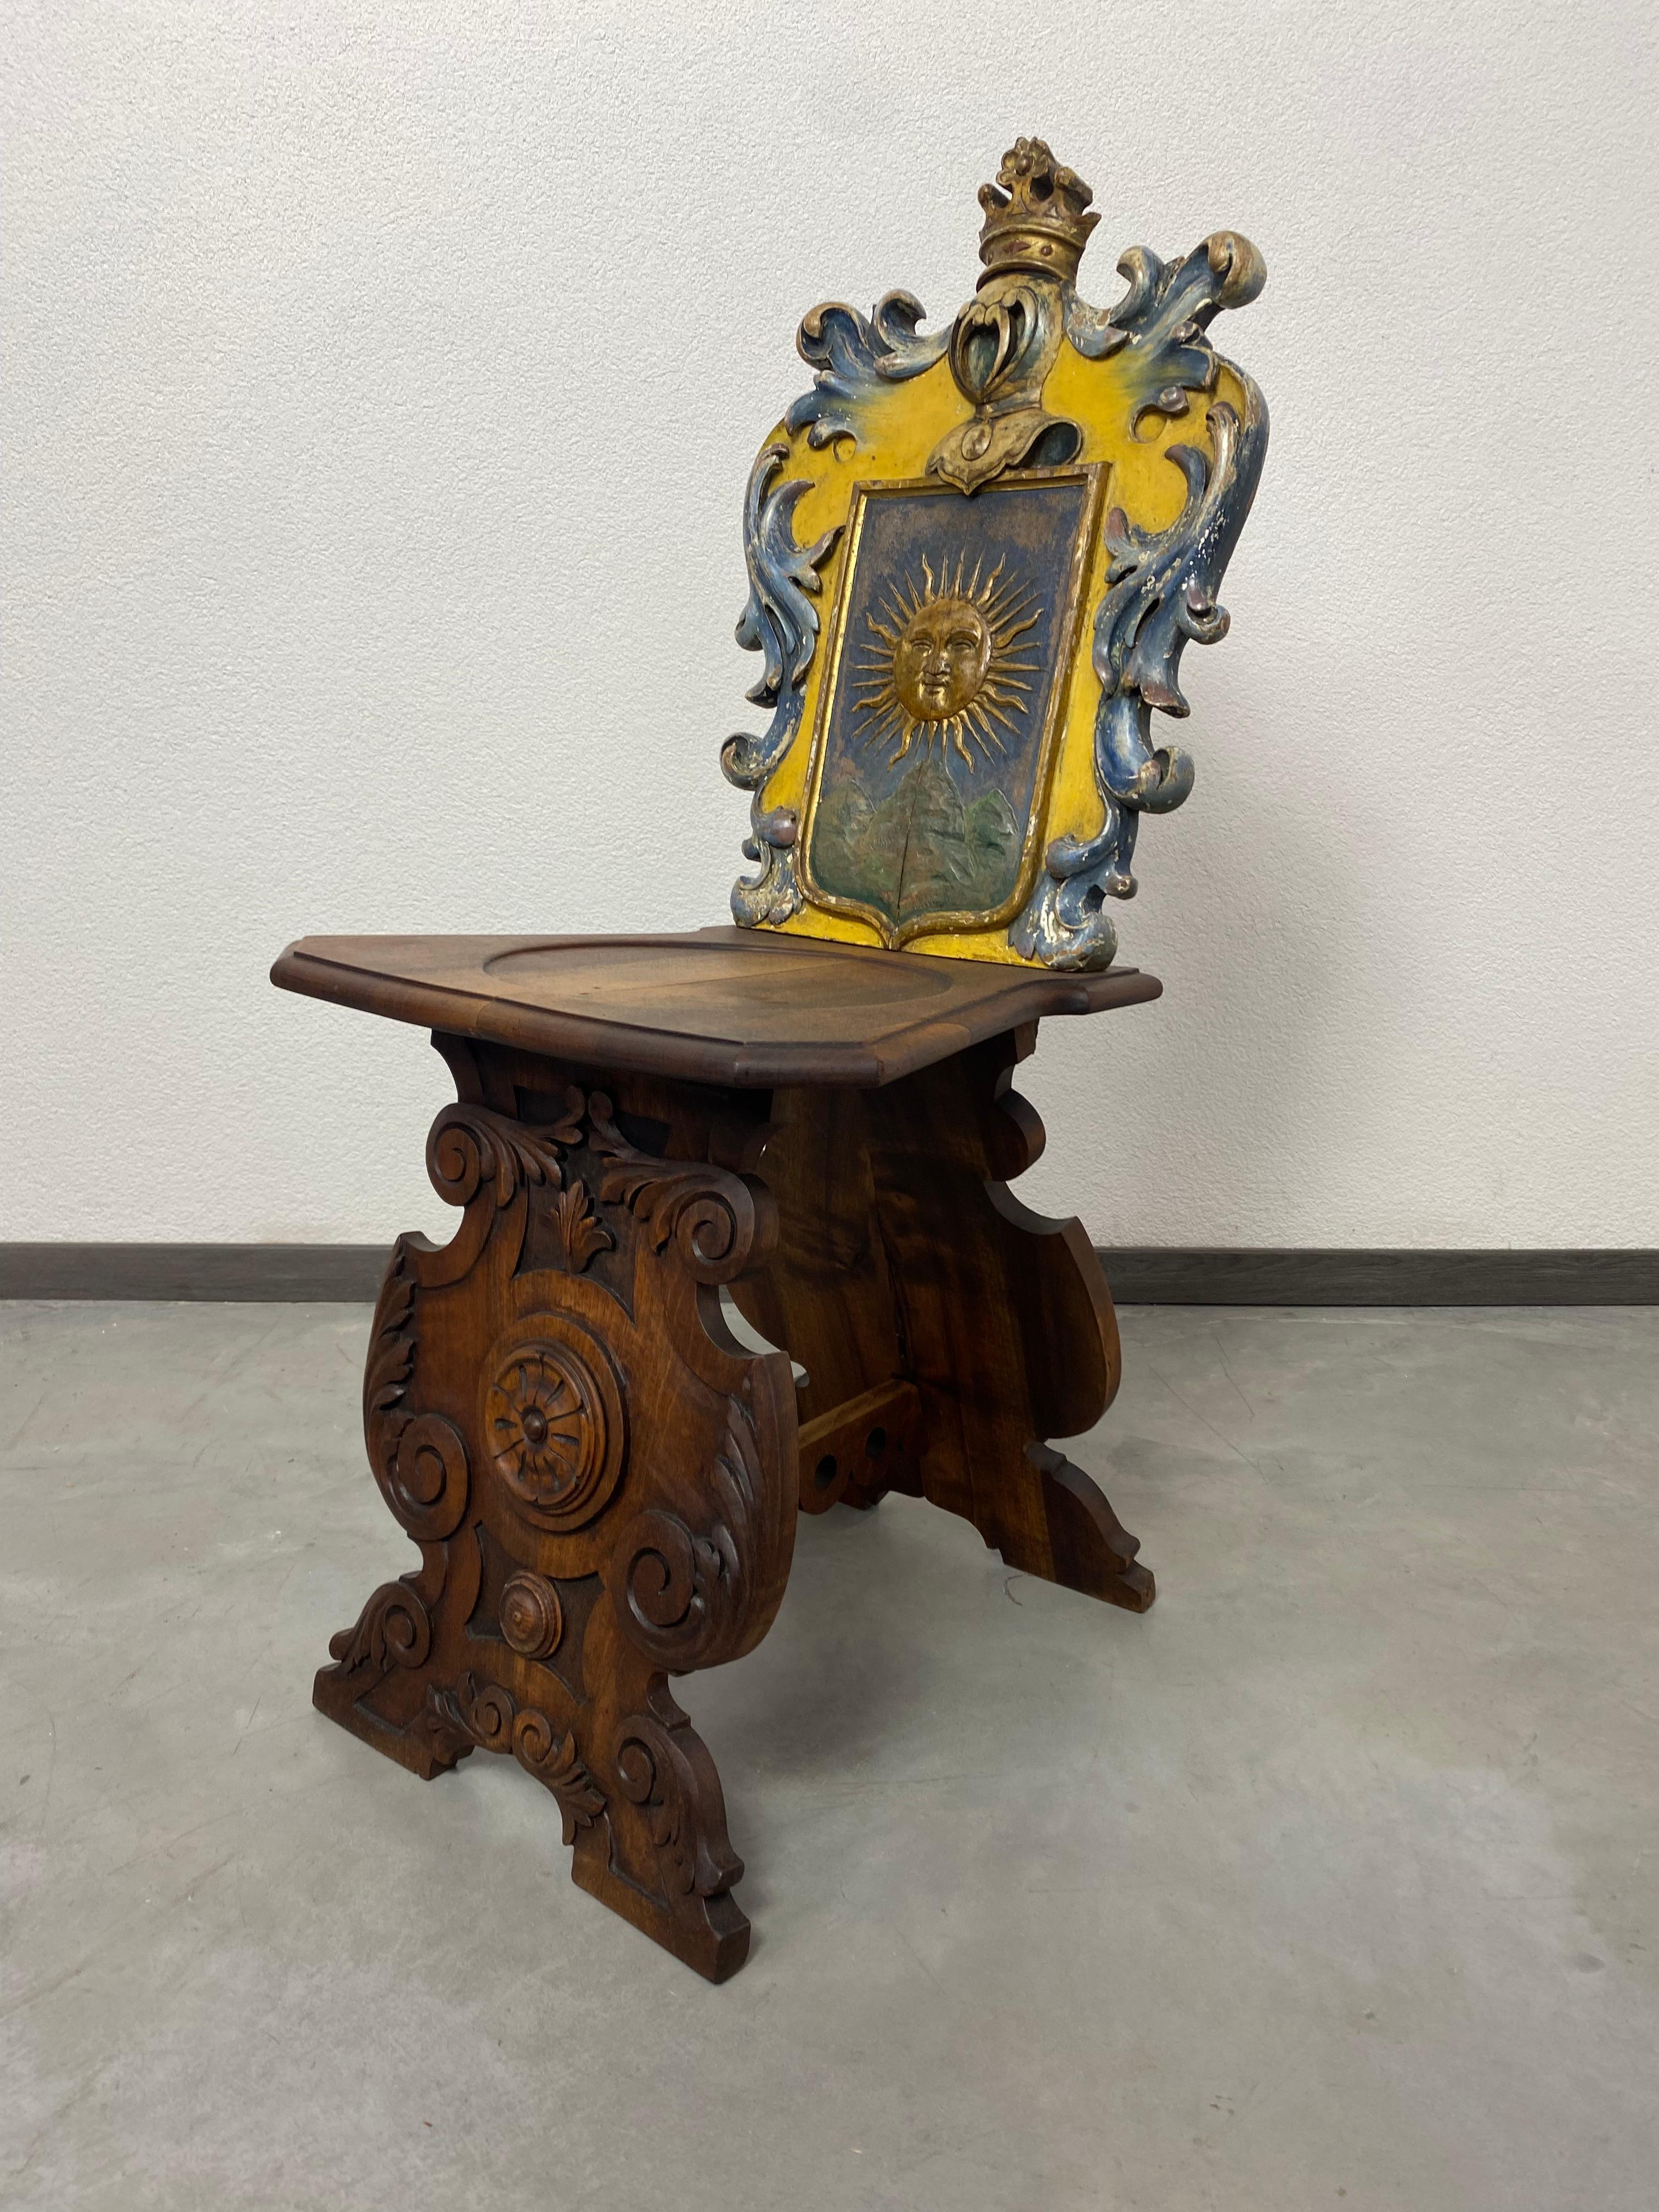 Renaissance chair with heraldic emblems of the Szontágh de Igló et Zabar family in excellent original condition.